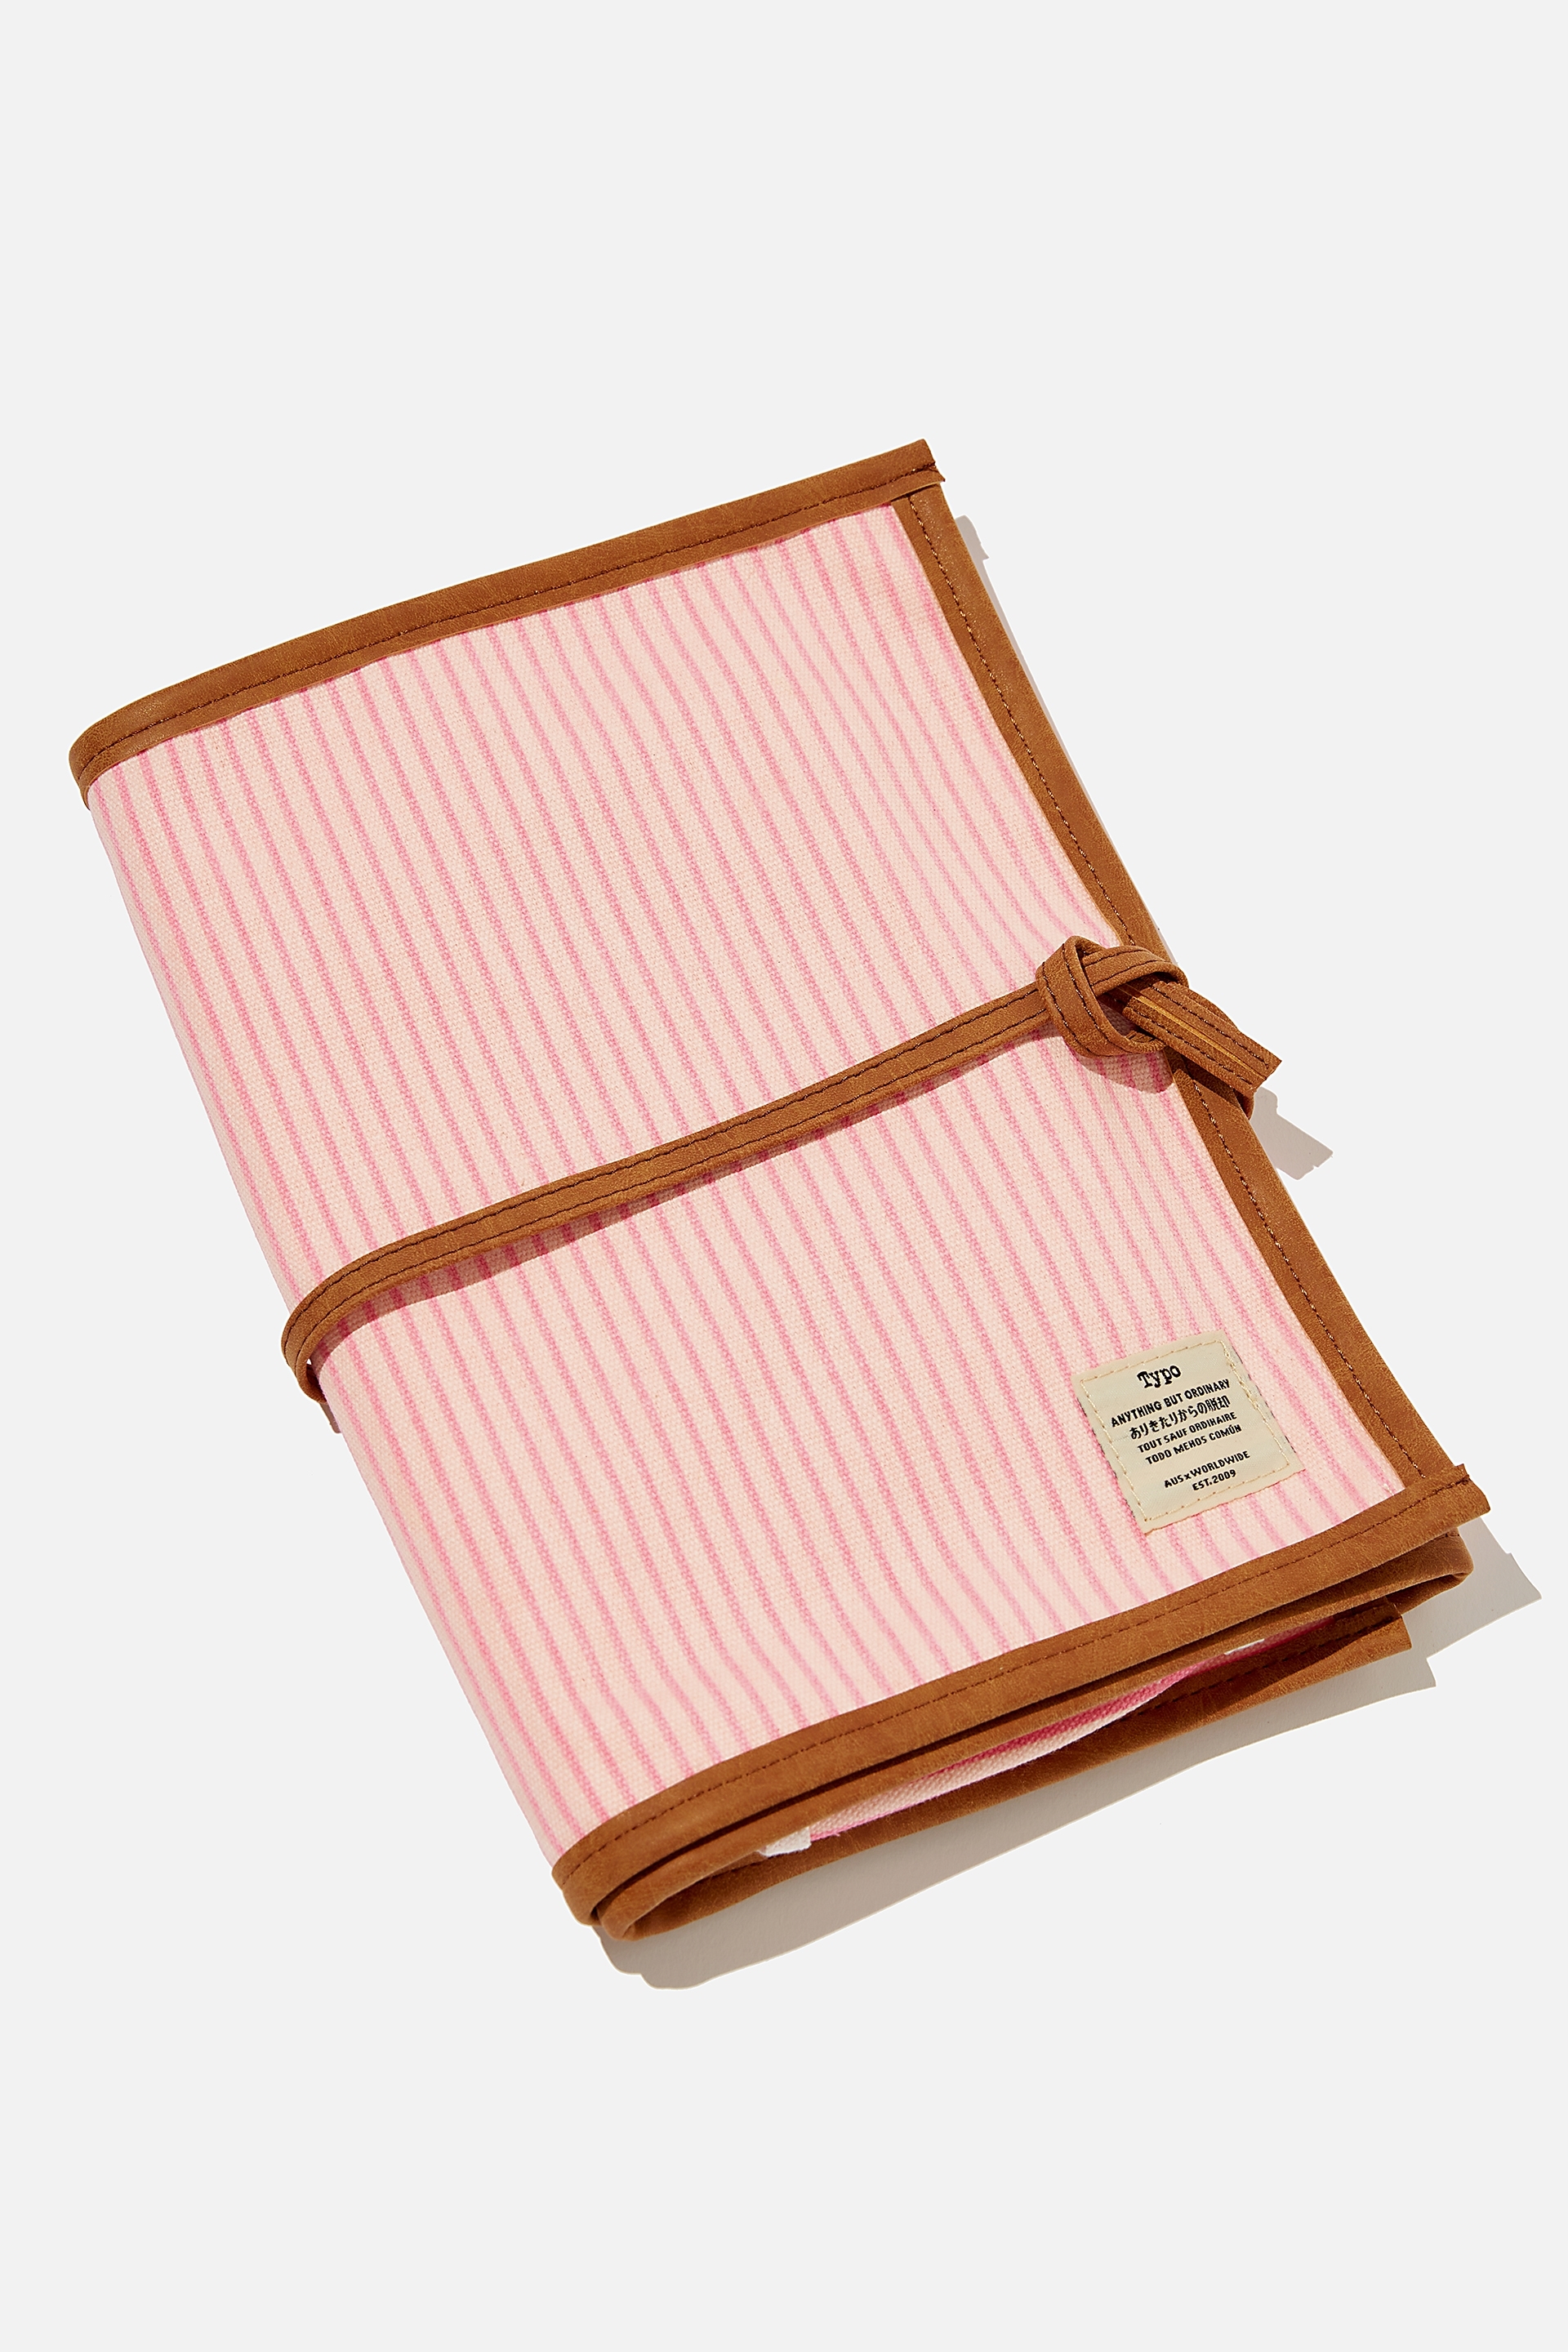 Typo - Artists Marker Case 36 - Parker stripe pink